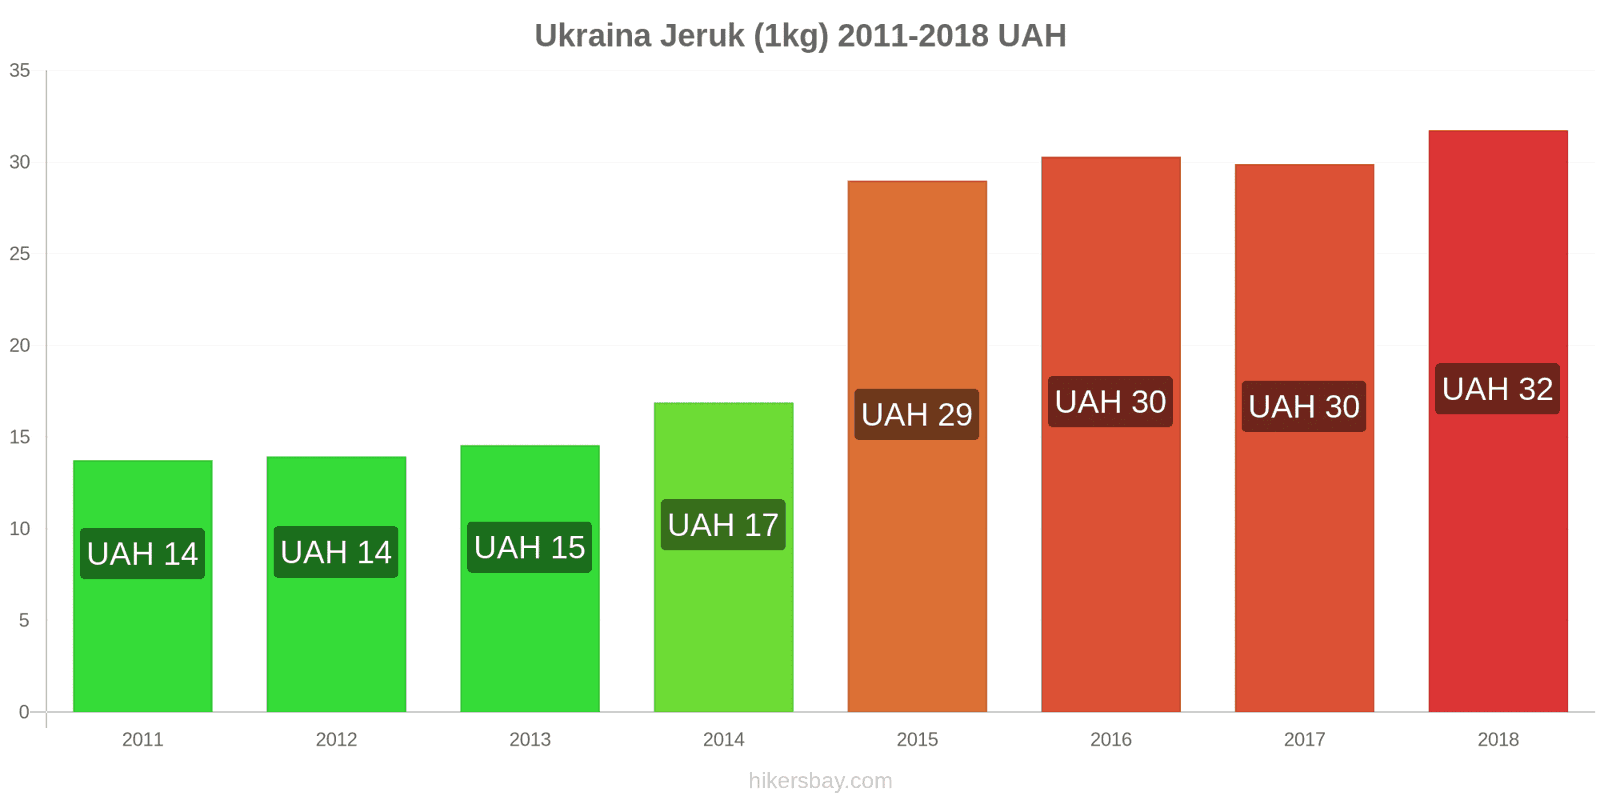 Ukraina perubahan harga Jeruk (1kg) hikersbay.com